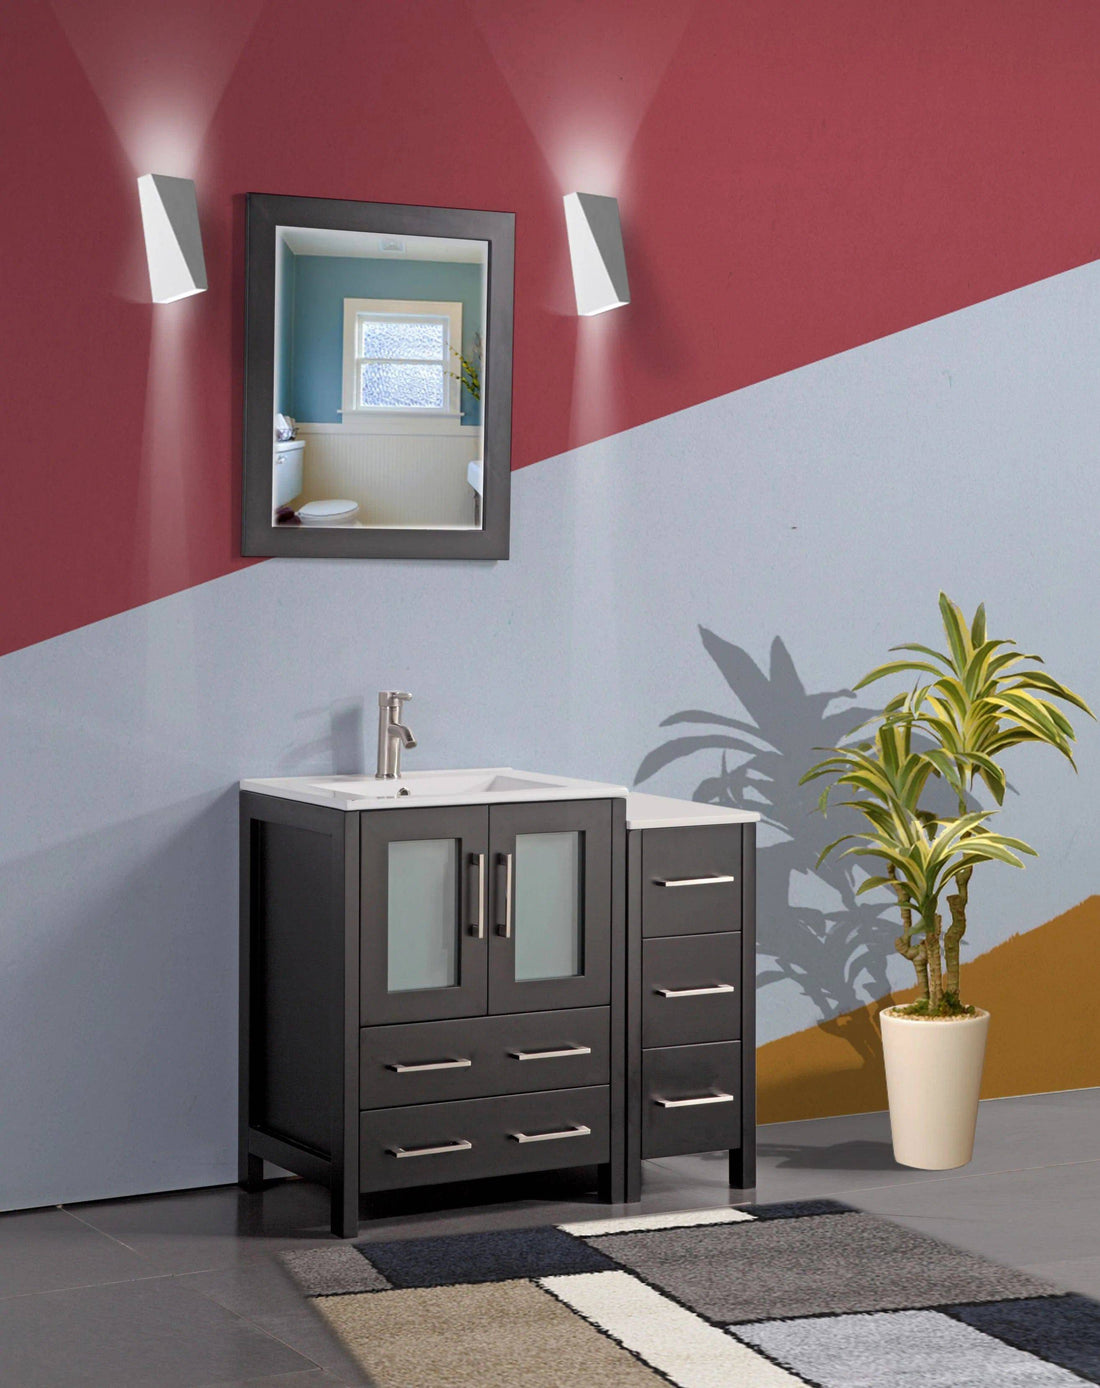 36 in. Single Sink Modern Bathroom Vanity Combo Set in Espresso - Decohub Home